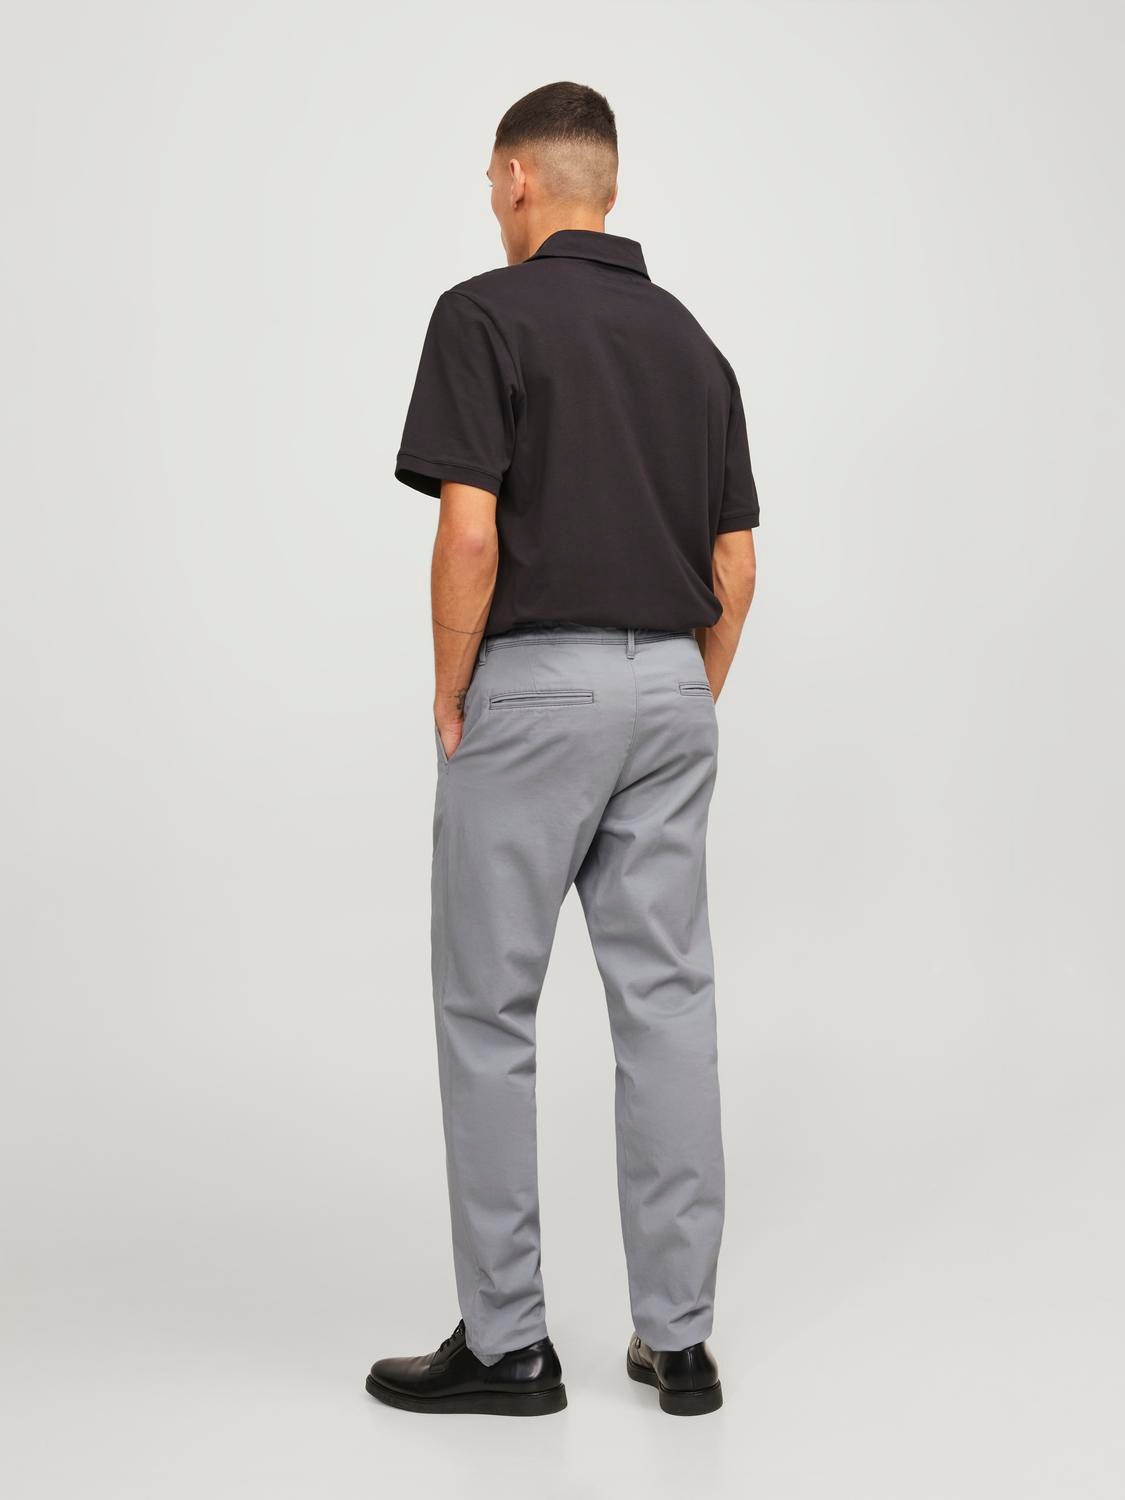 Jack & Jones Slim Fit Spodnie chino -Ultimate Grey - 12150148